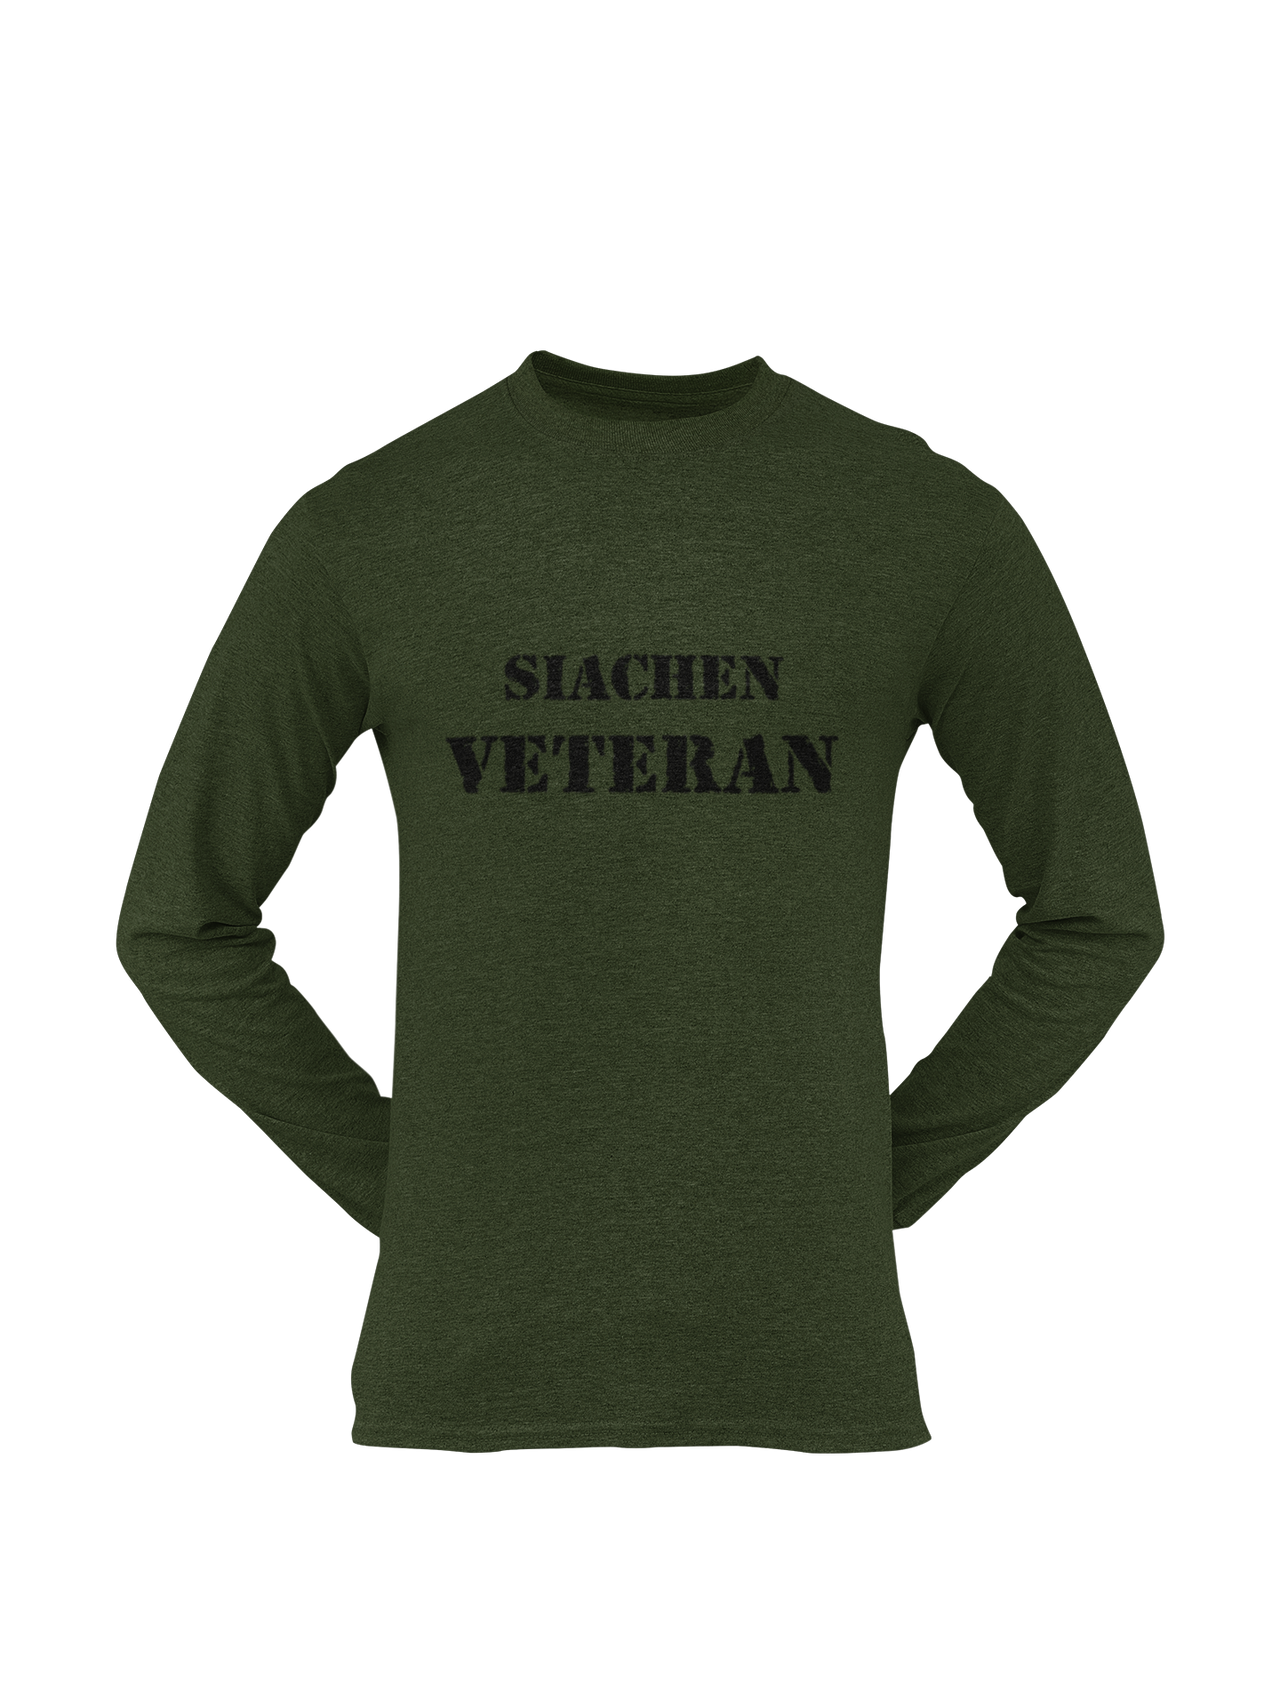 Military T-shirt - Siachen Veteran (Men)